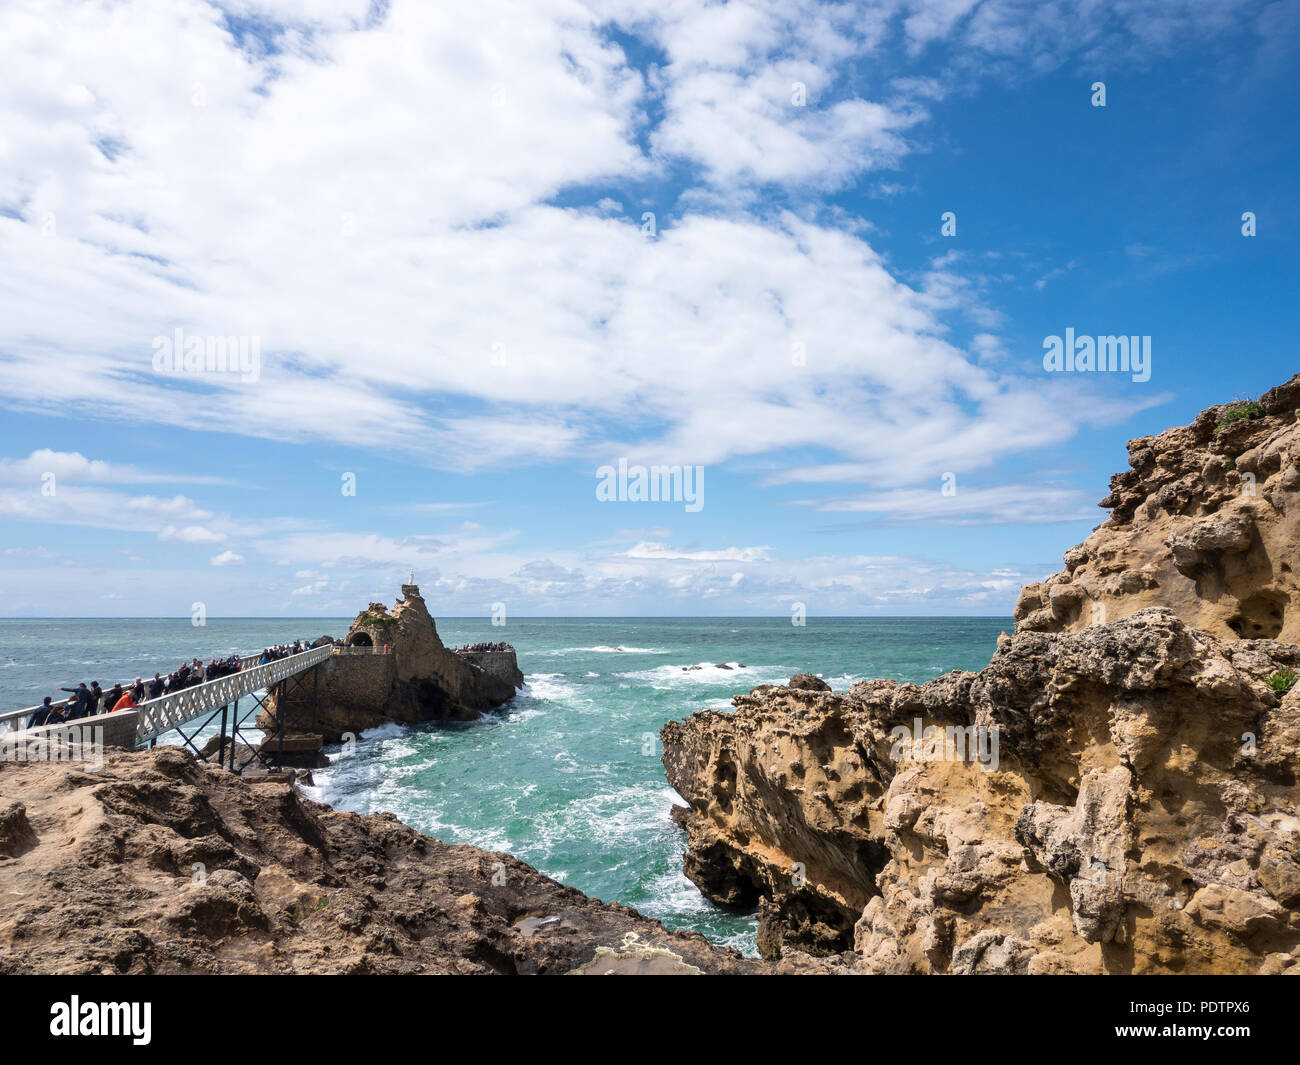 Scenery of the coastline in Biarritz France Stock Photo